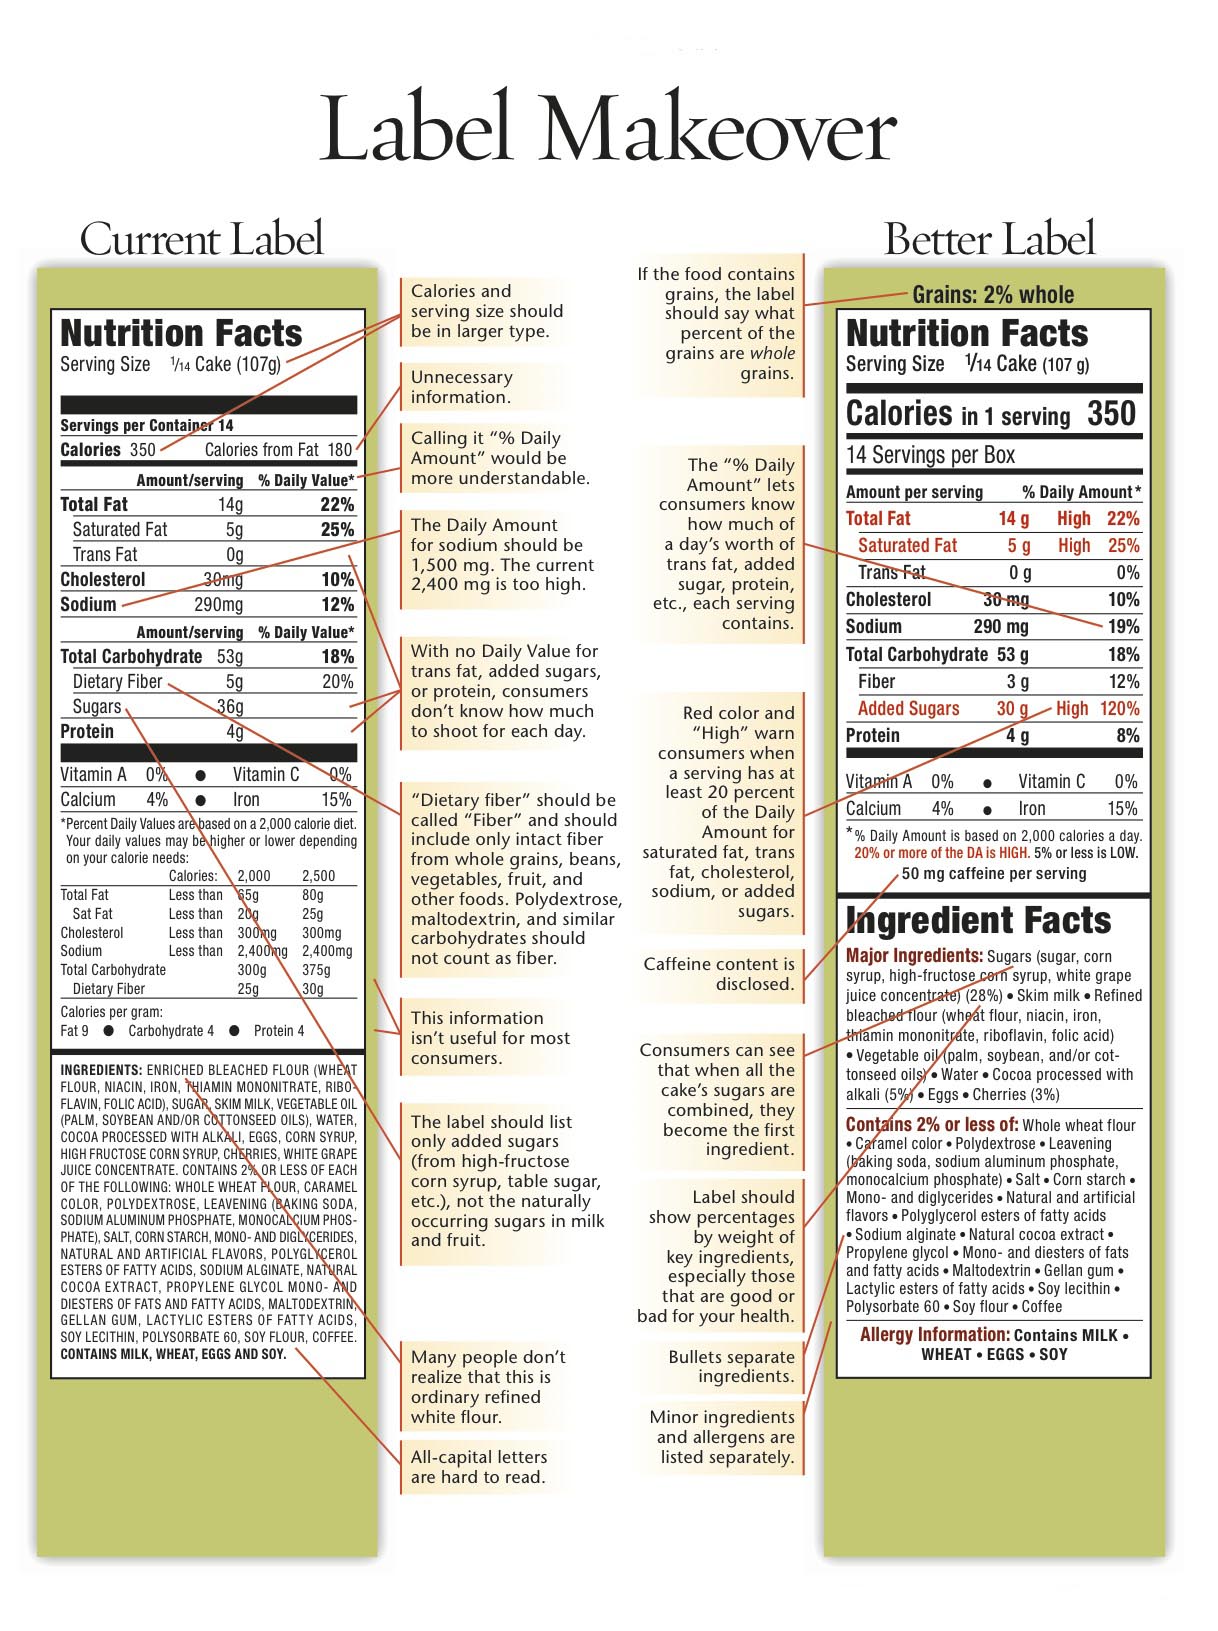 Better Nutrition Label for Food